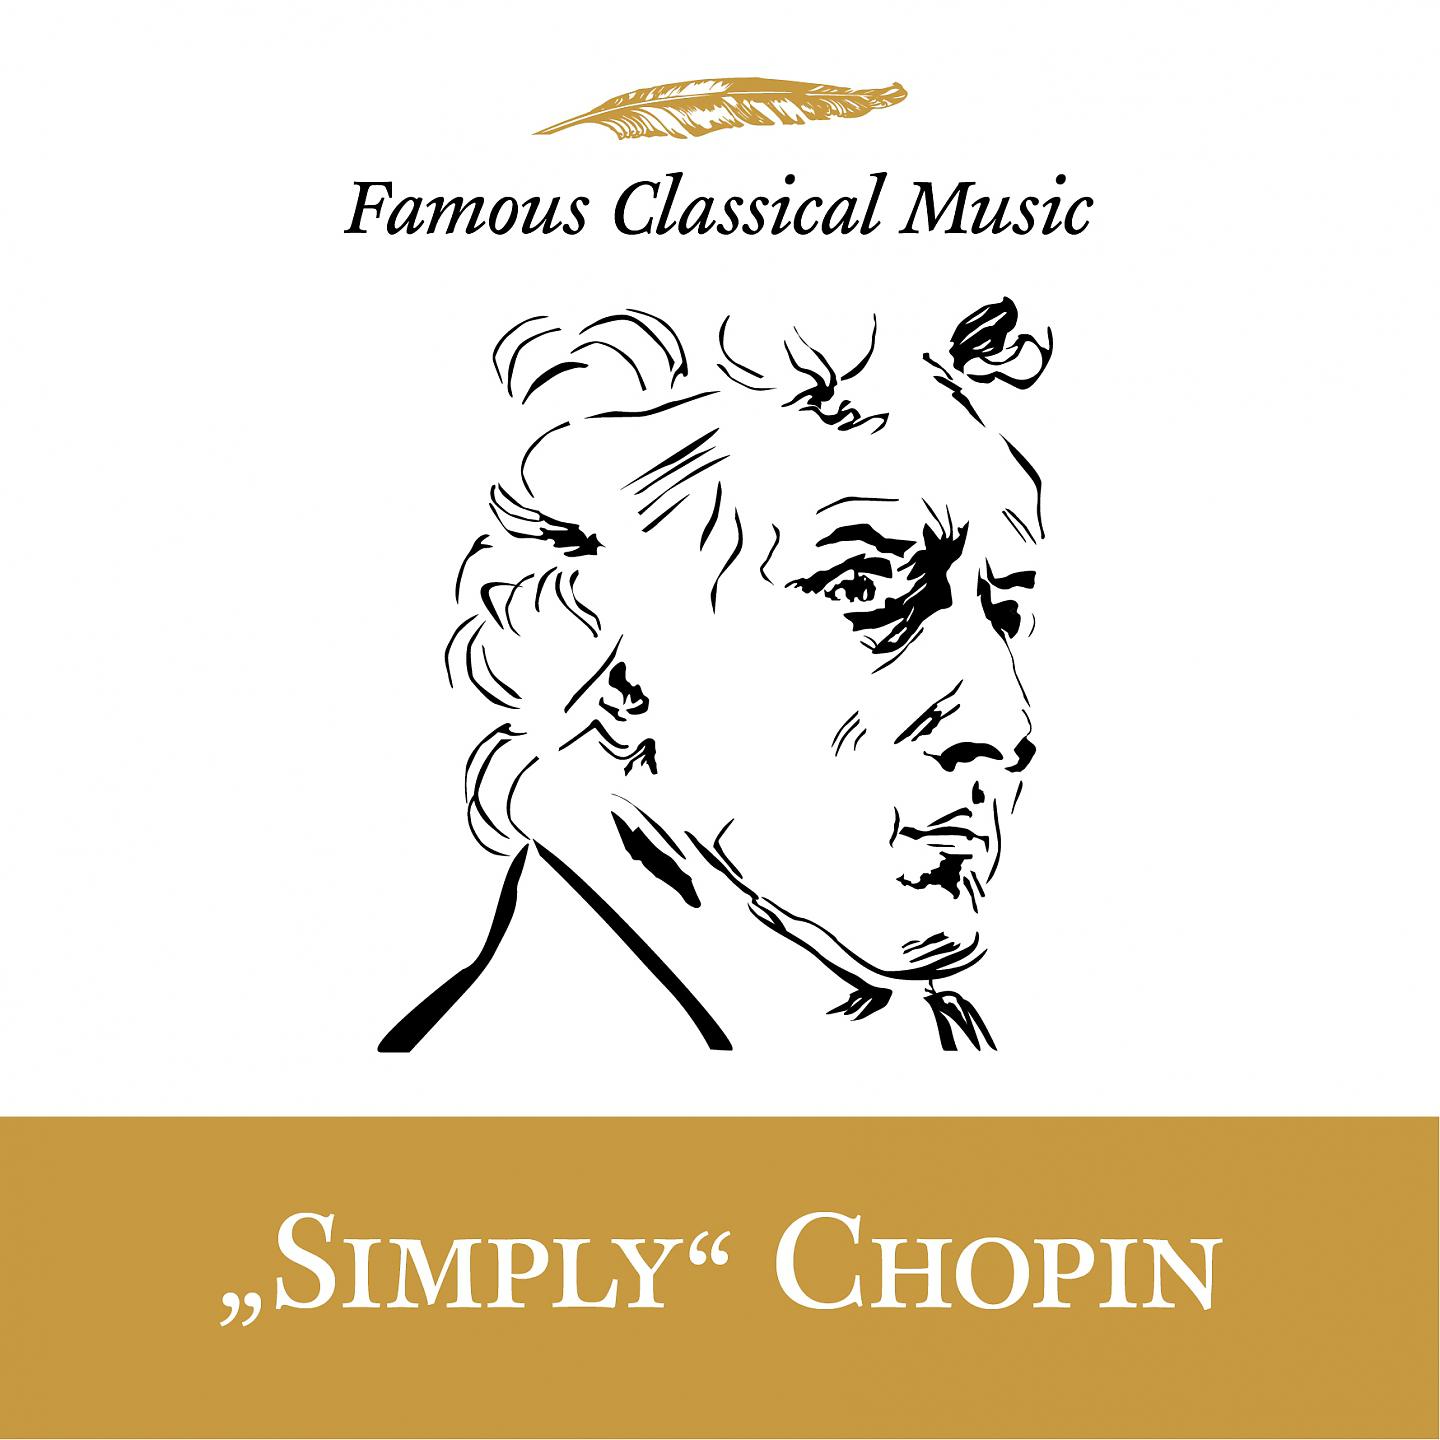 Постер альбома "Simply" Chopin